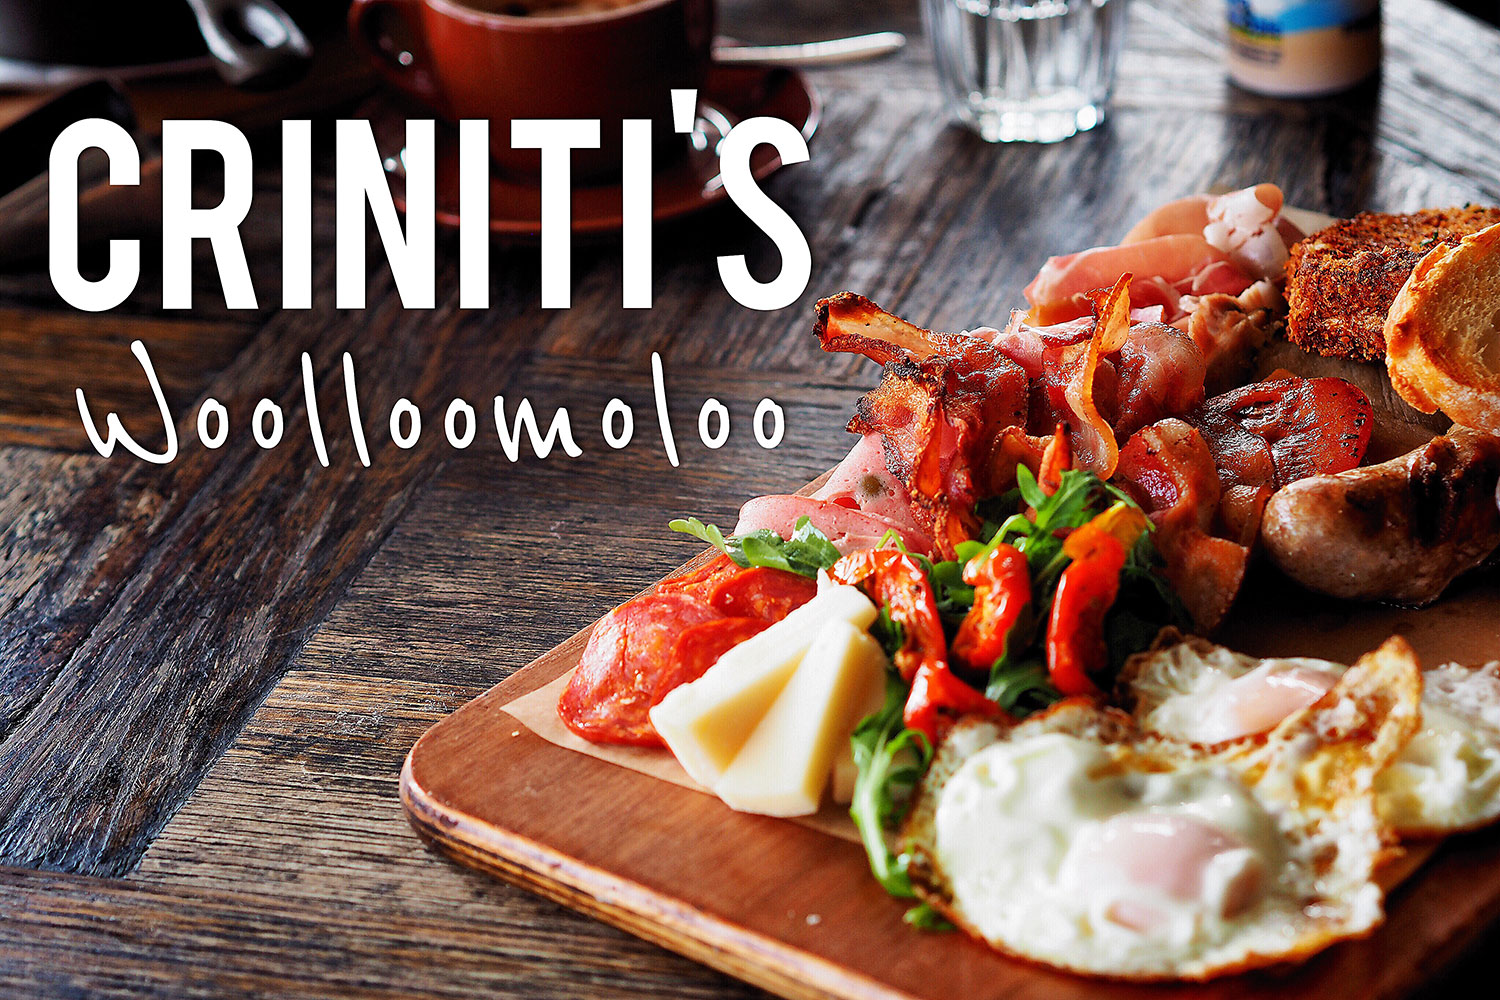 Sydney Food Blog Review of Criniti's, Woolloomoloo